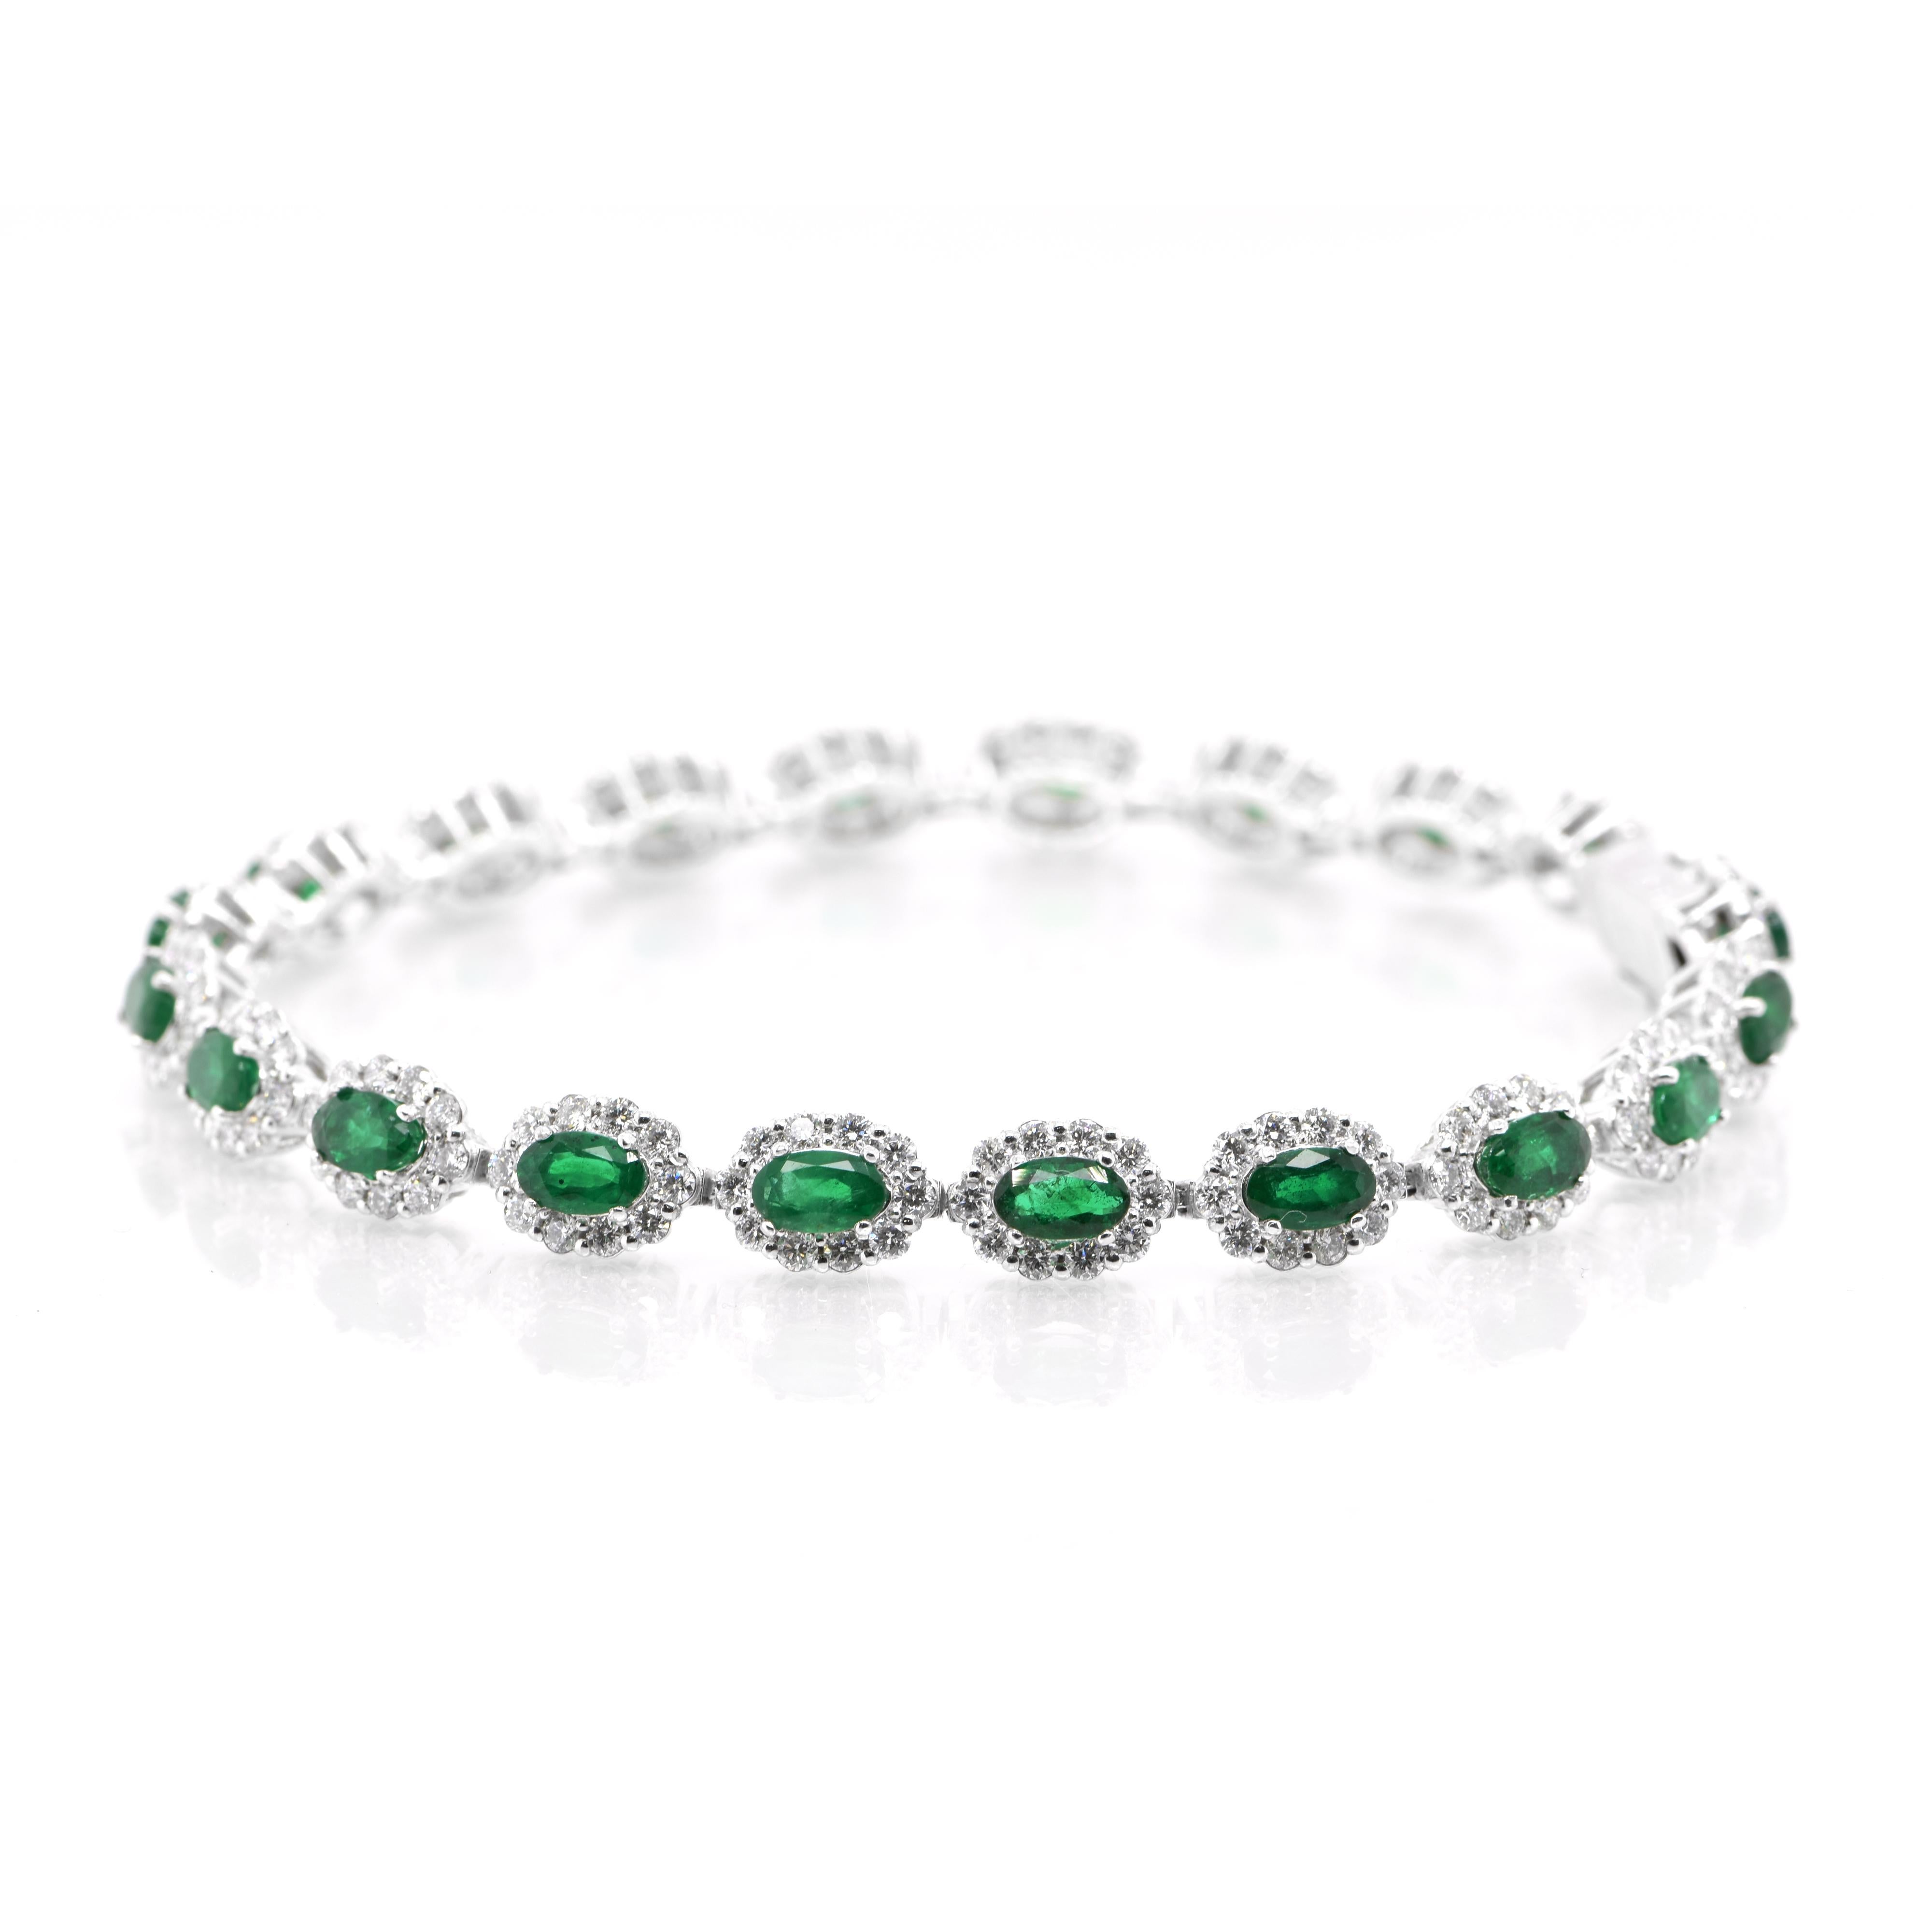 Modern 4.55 Carats, Natural Emeralds and Diamond Tennis Bracelet Set in Platinum